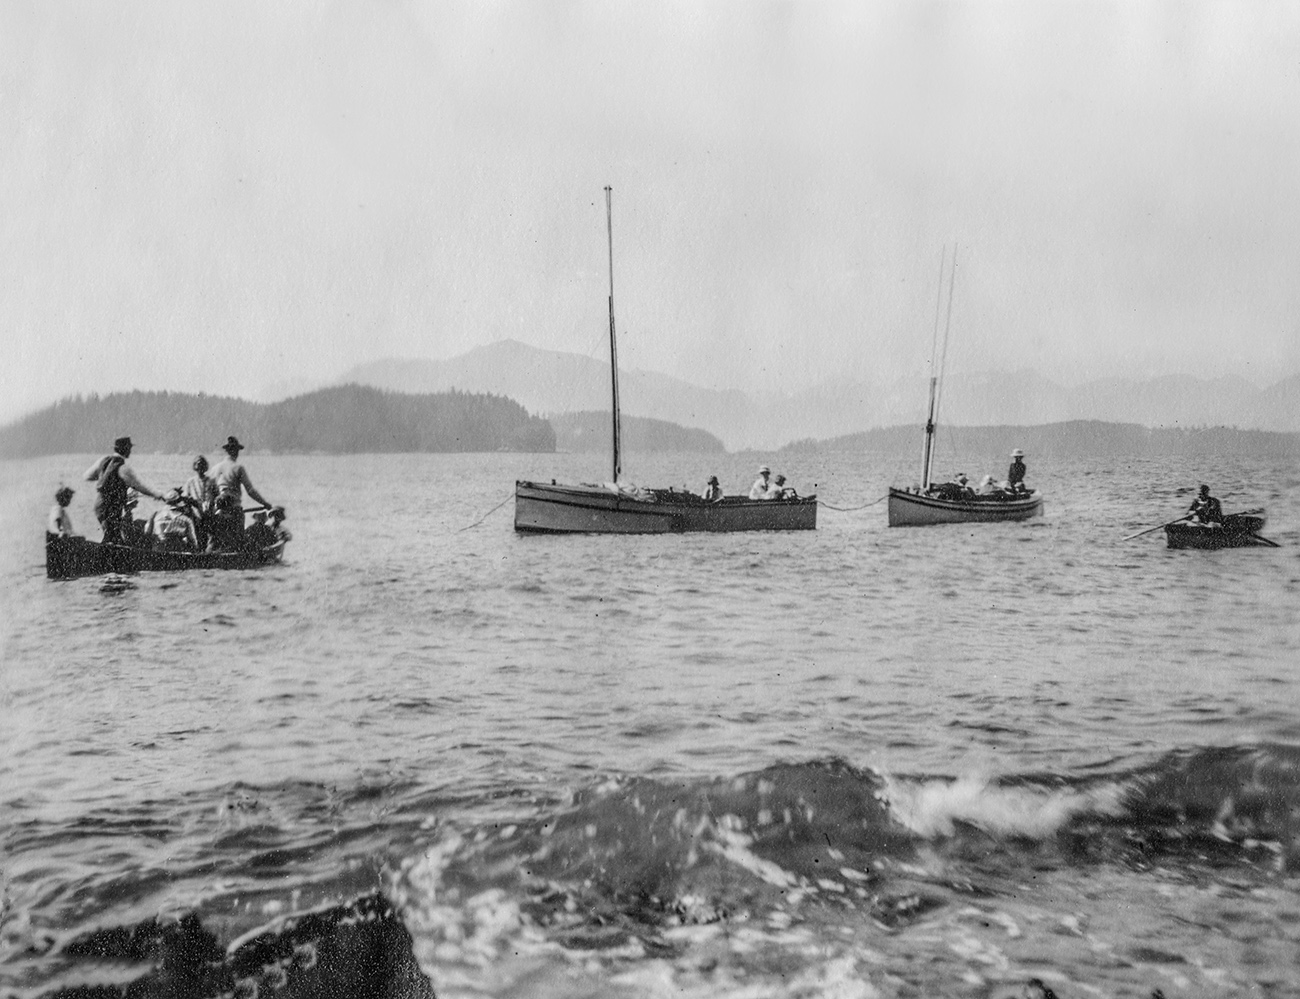 #26 - Boats for a picnic at Brady's Beach, circa 1919